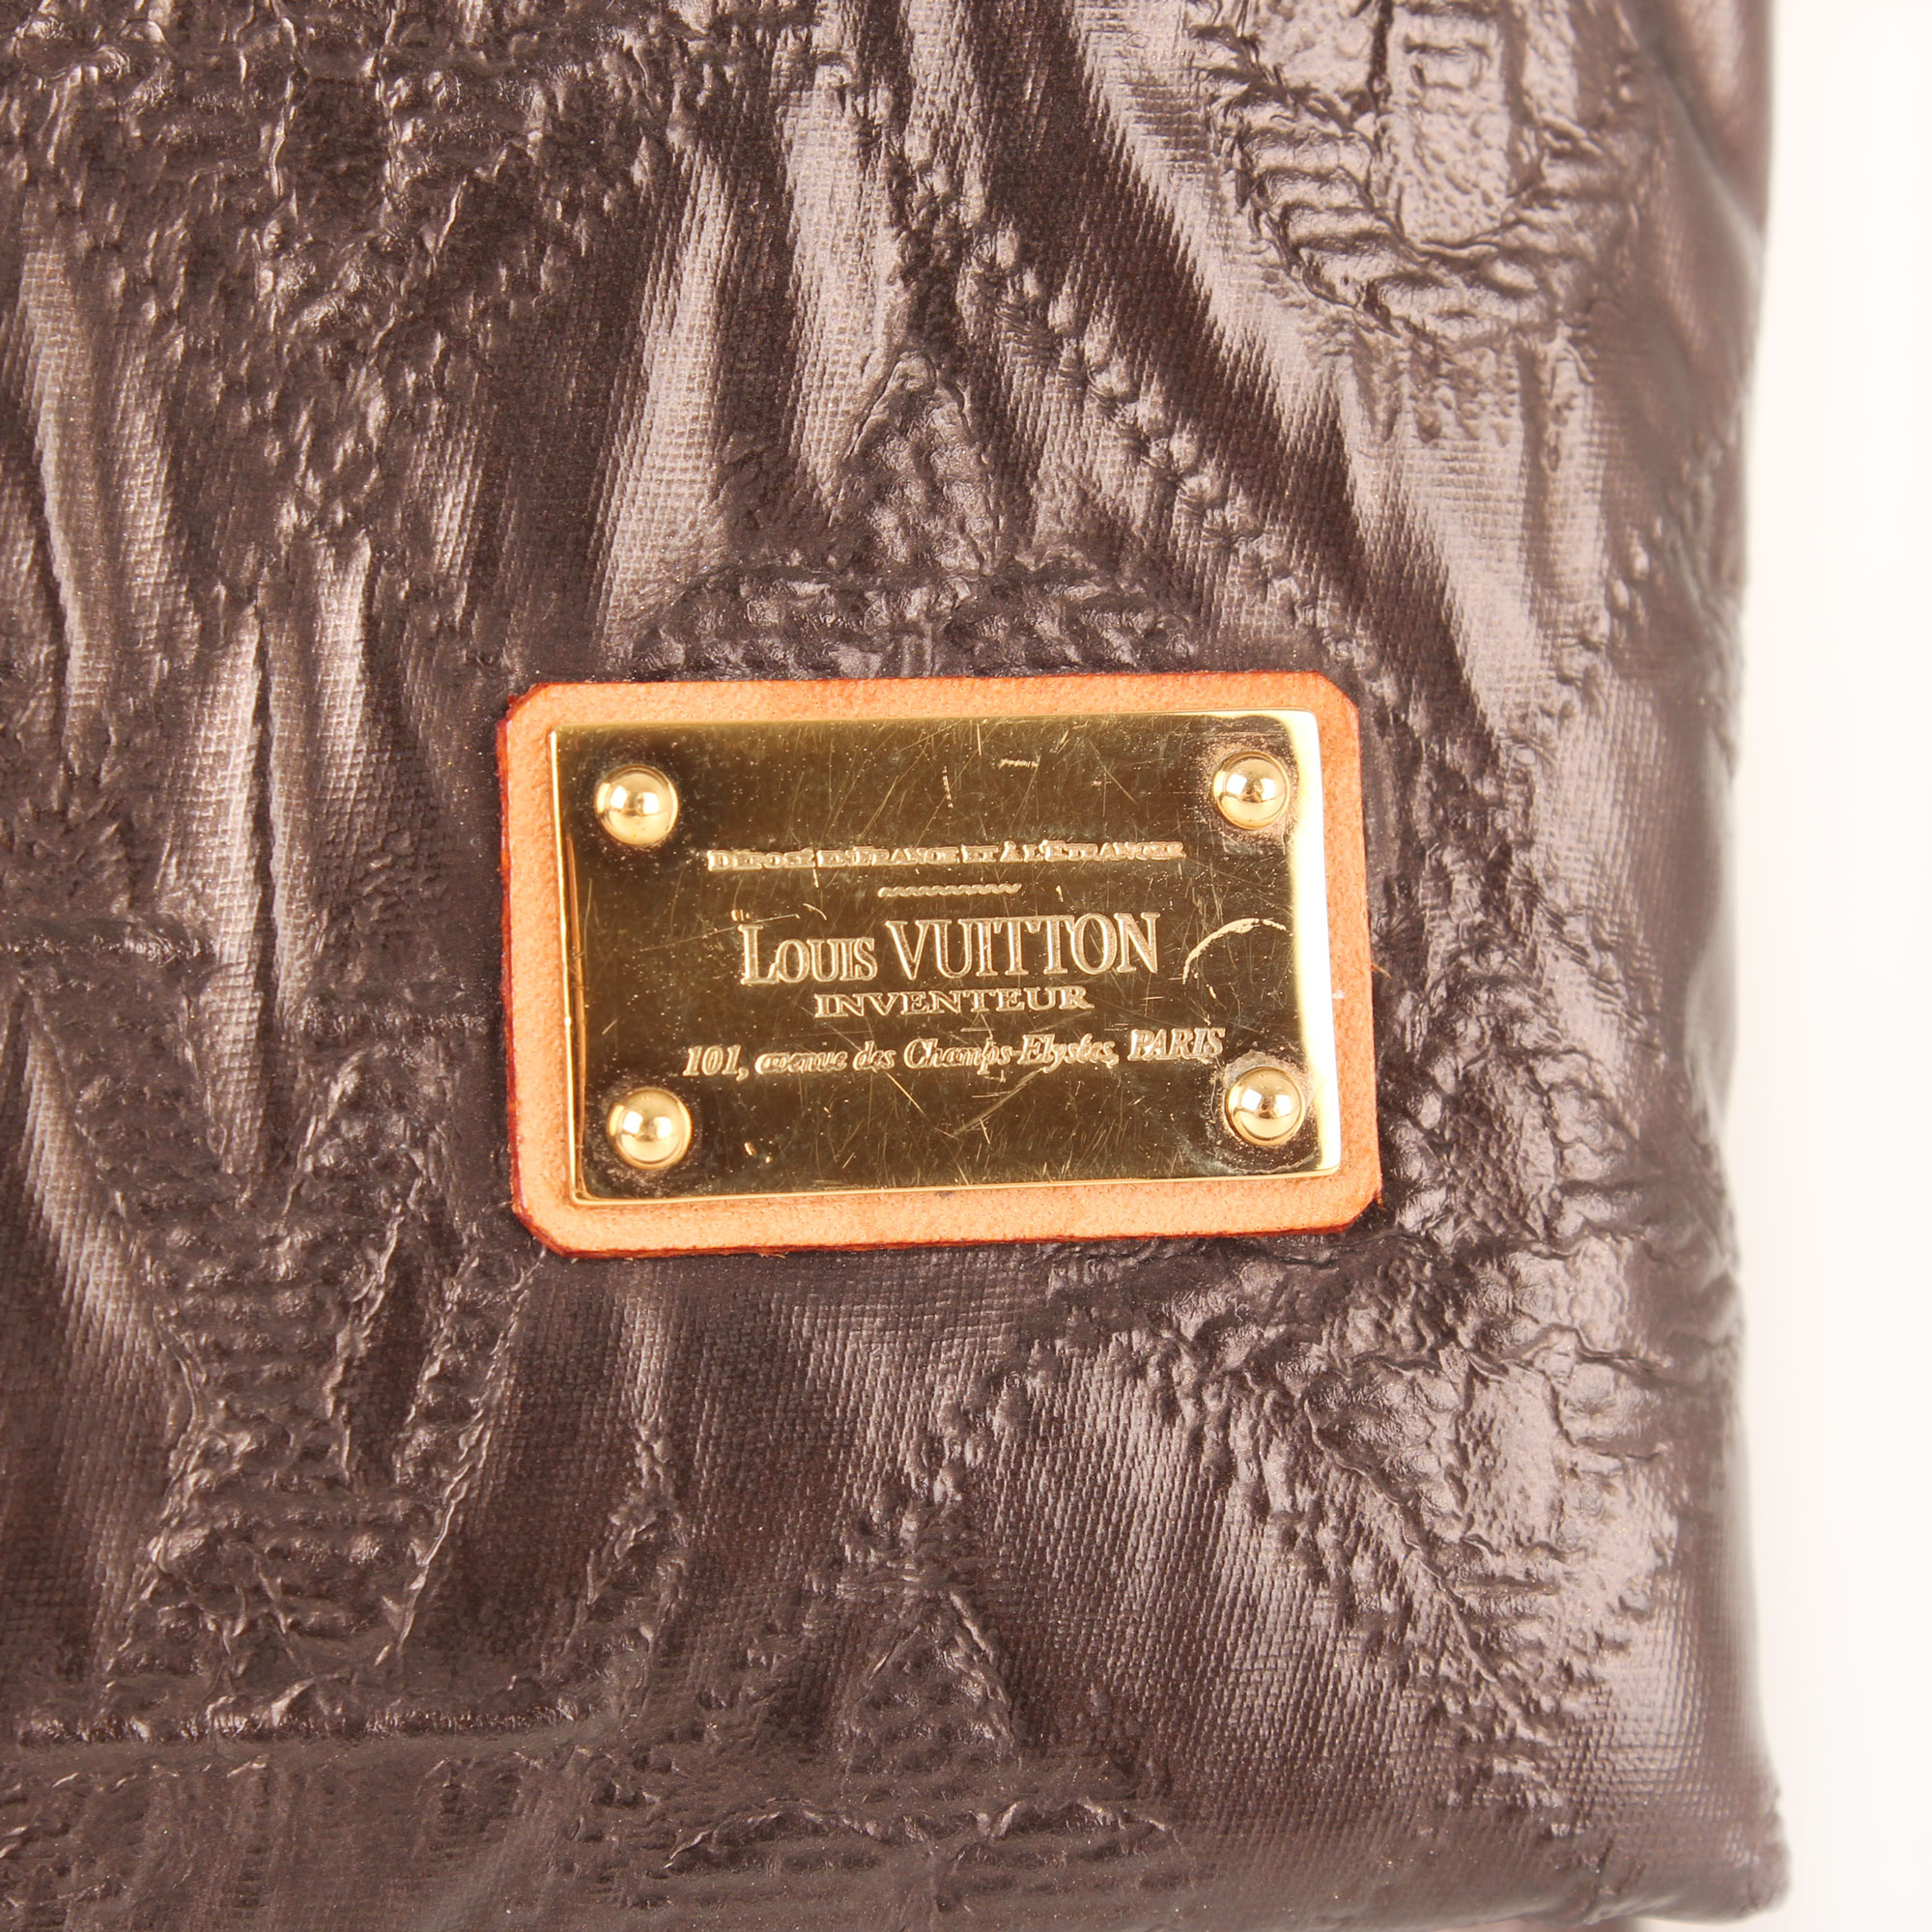 Vuitton Limelight GM in Metallic I CBL Bags